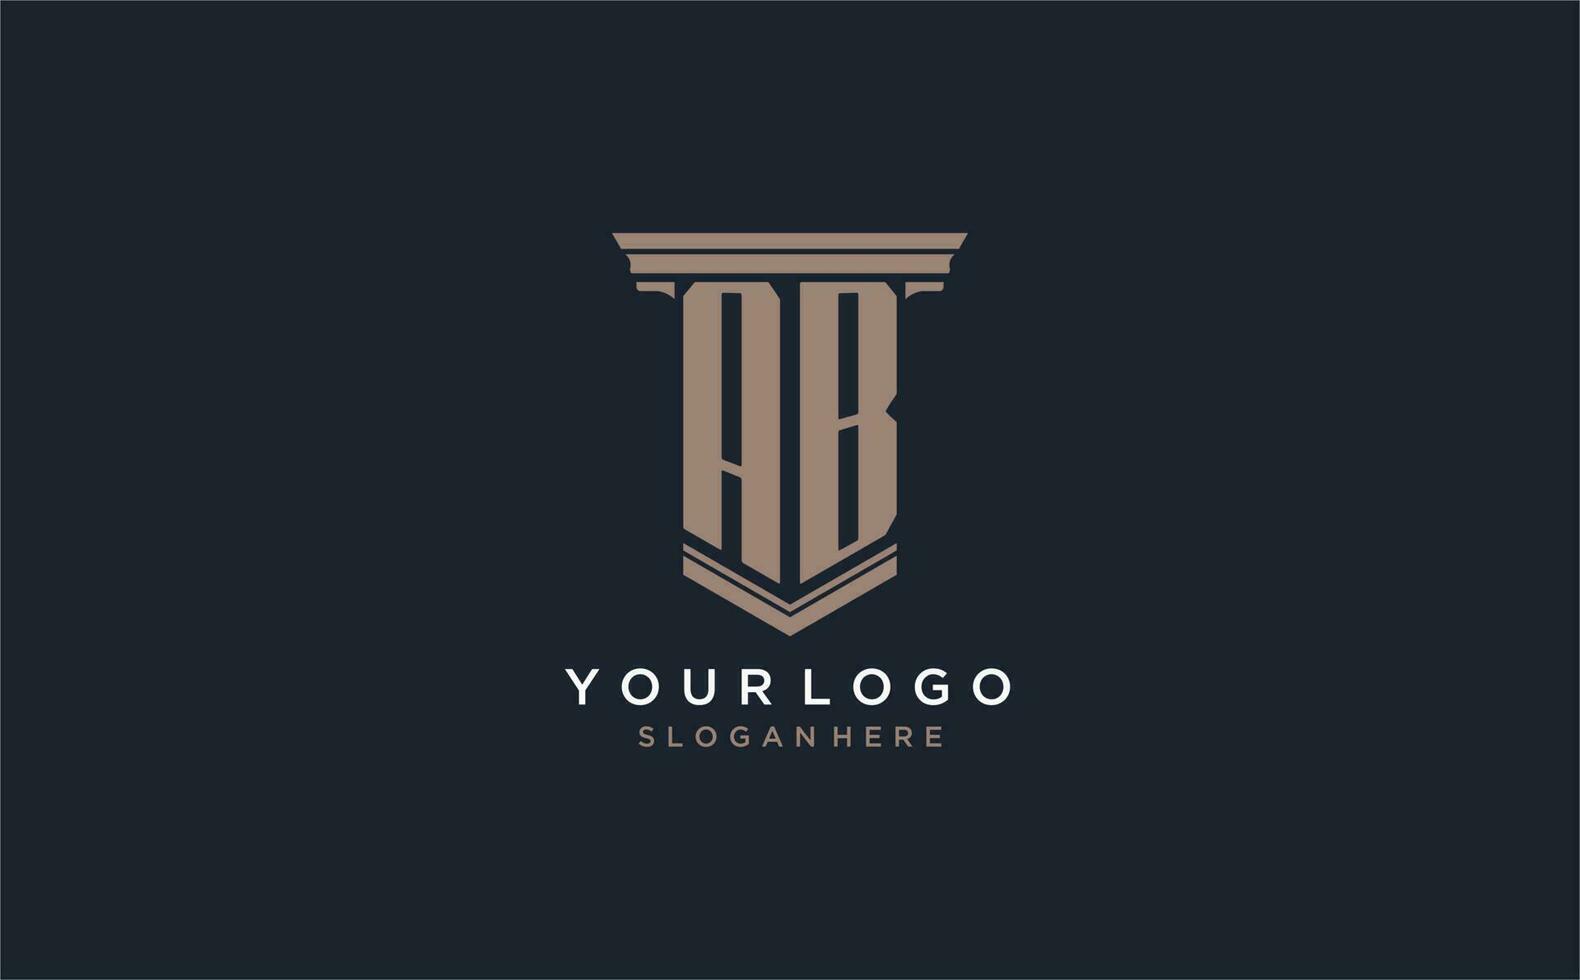 AB initial logo with pillar style, luxury law firm logo design ideas vector